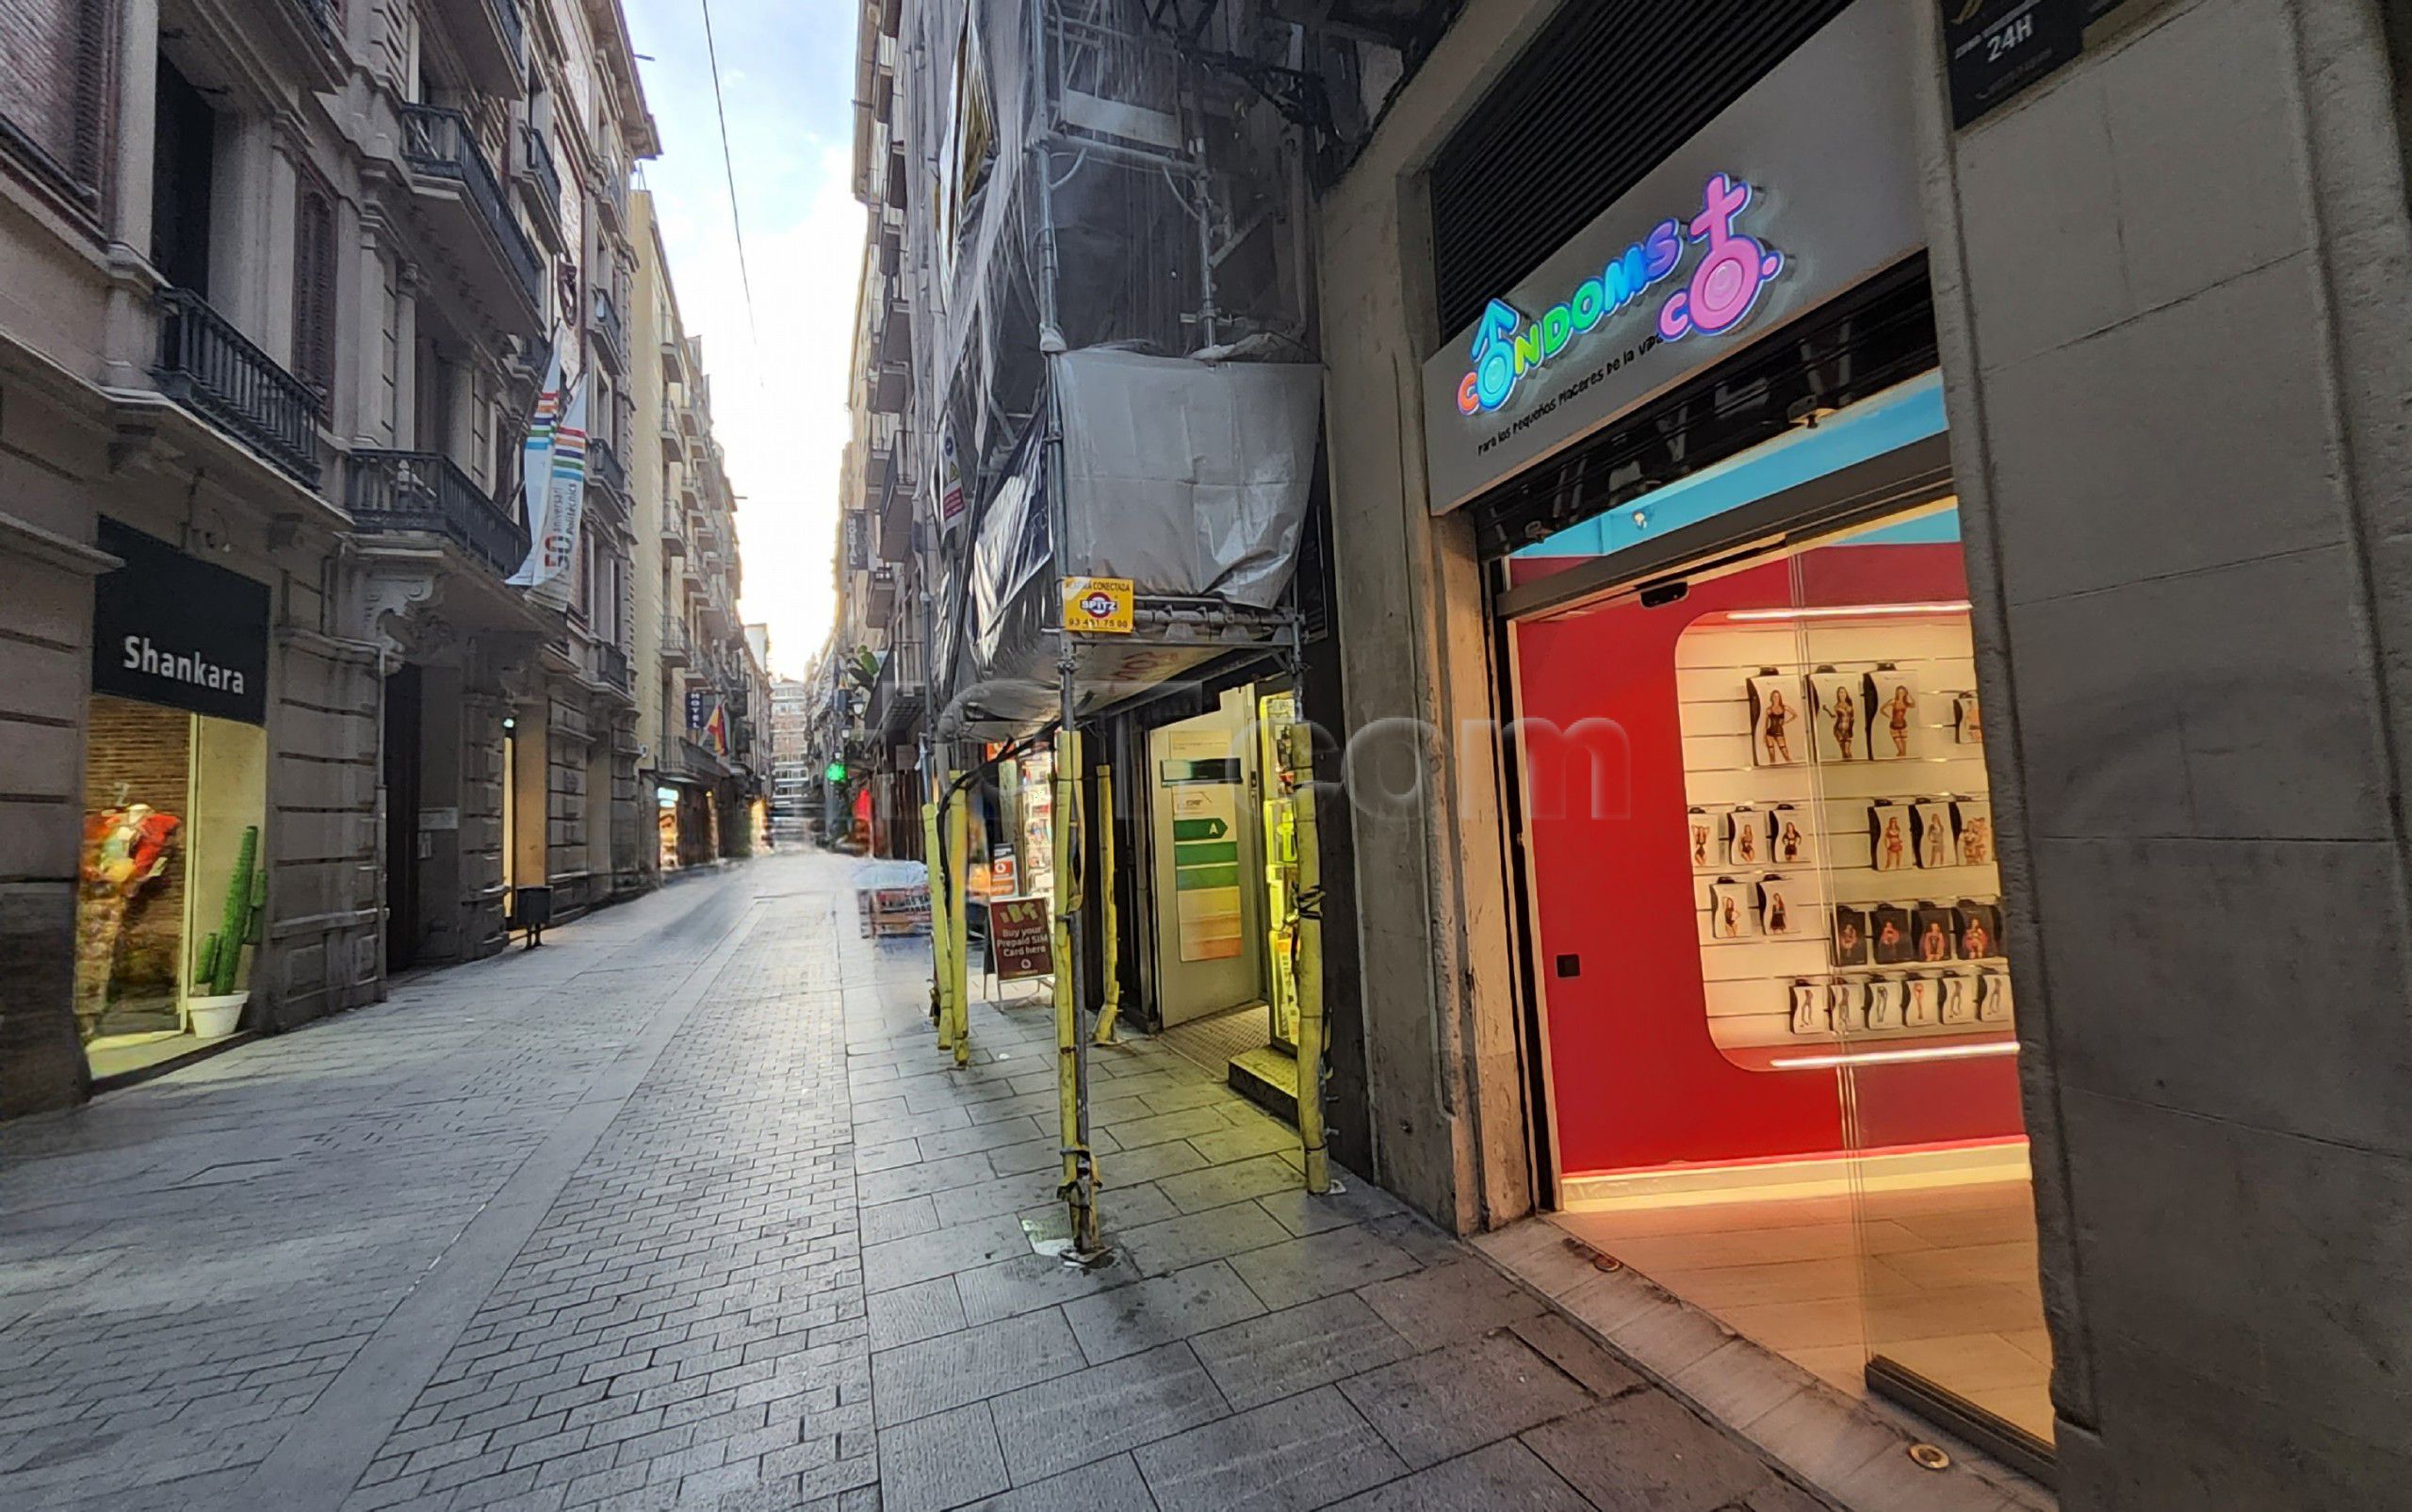 Barcelona, Spain Condoms & Co.